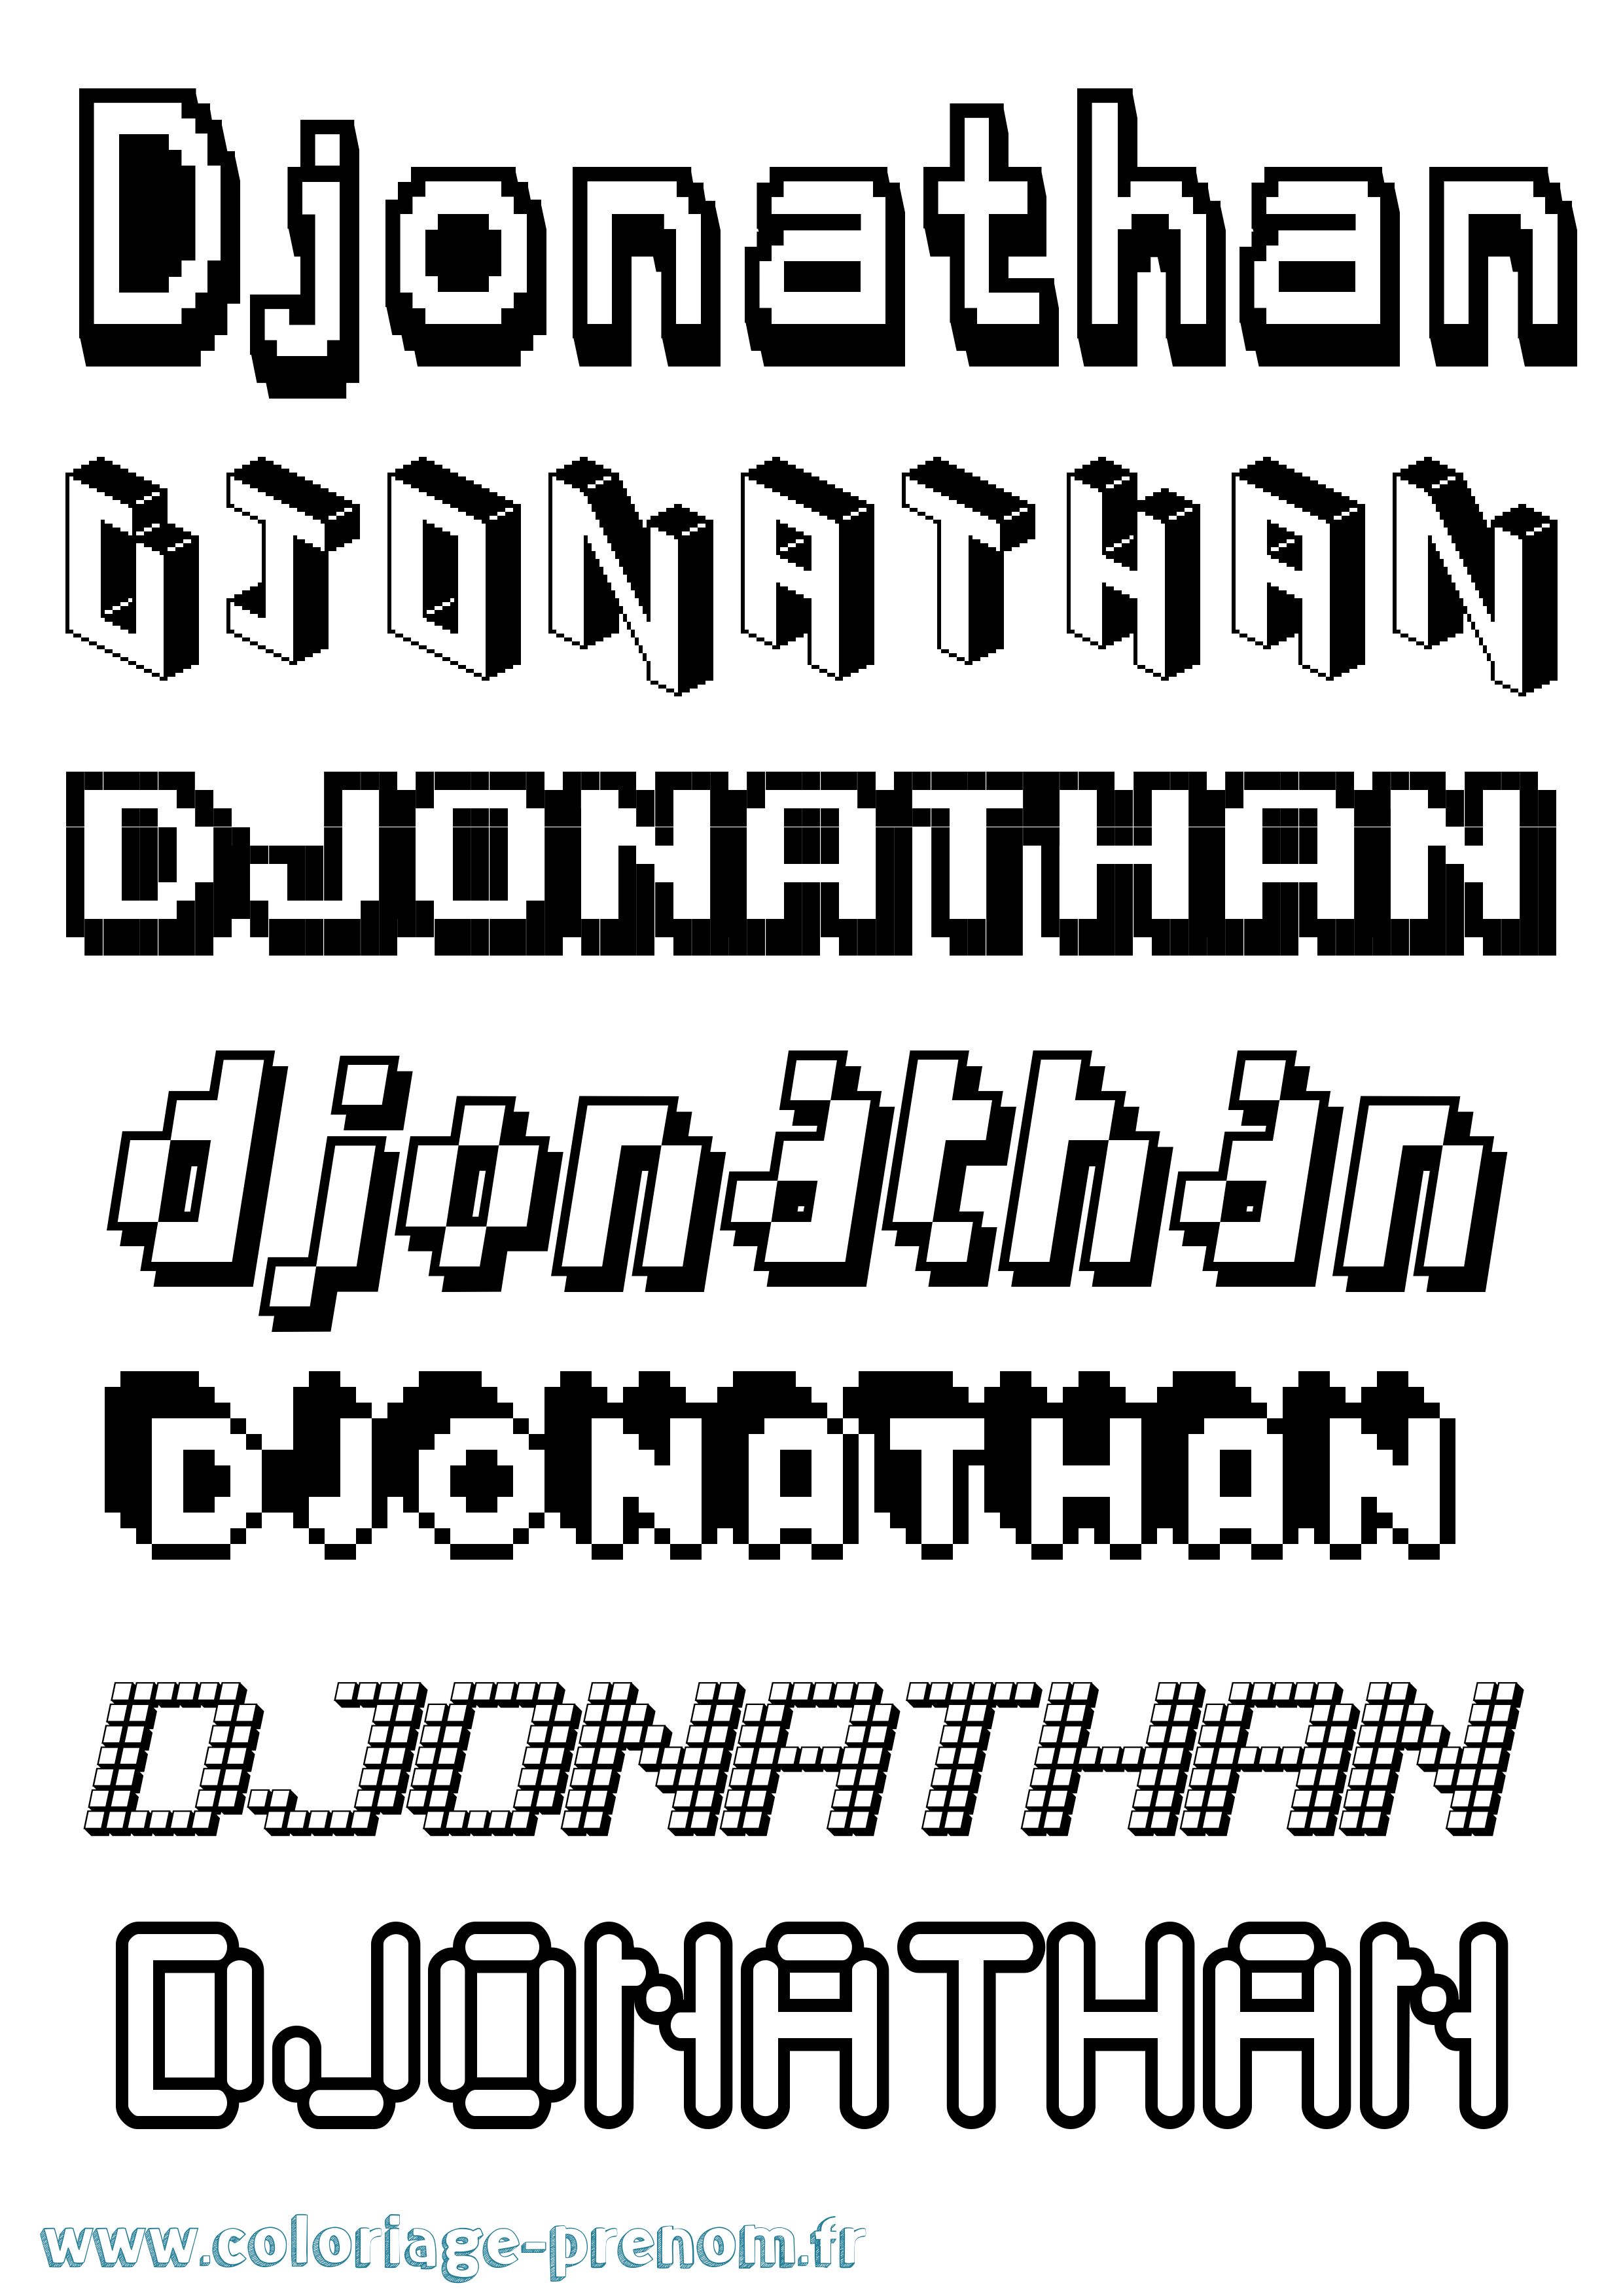 Coloriage prénom Djonathan Pixel